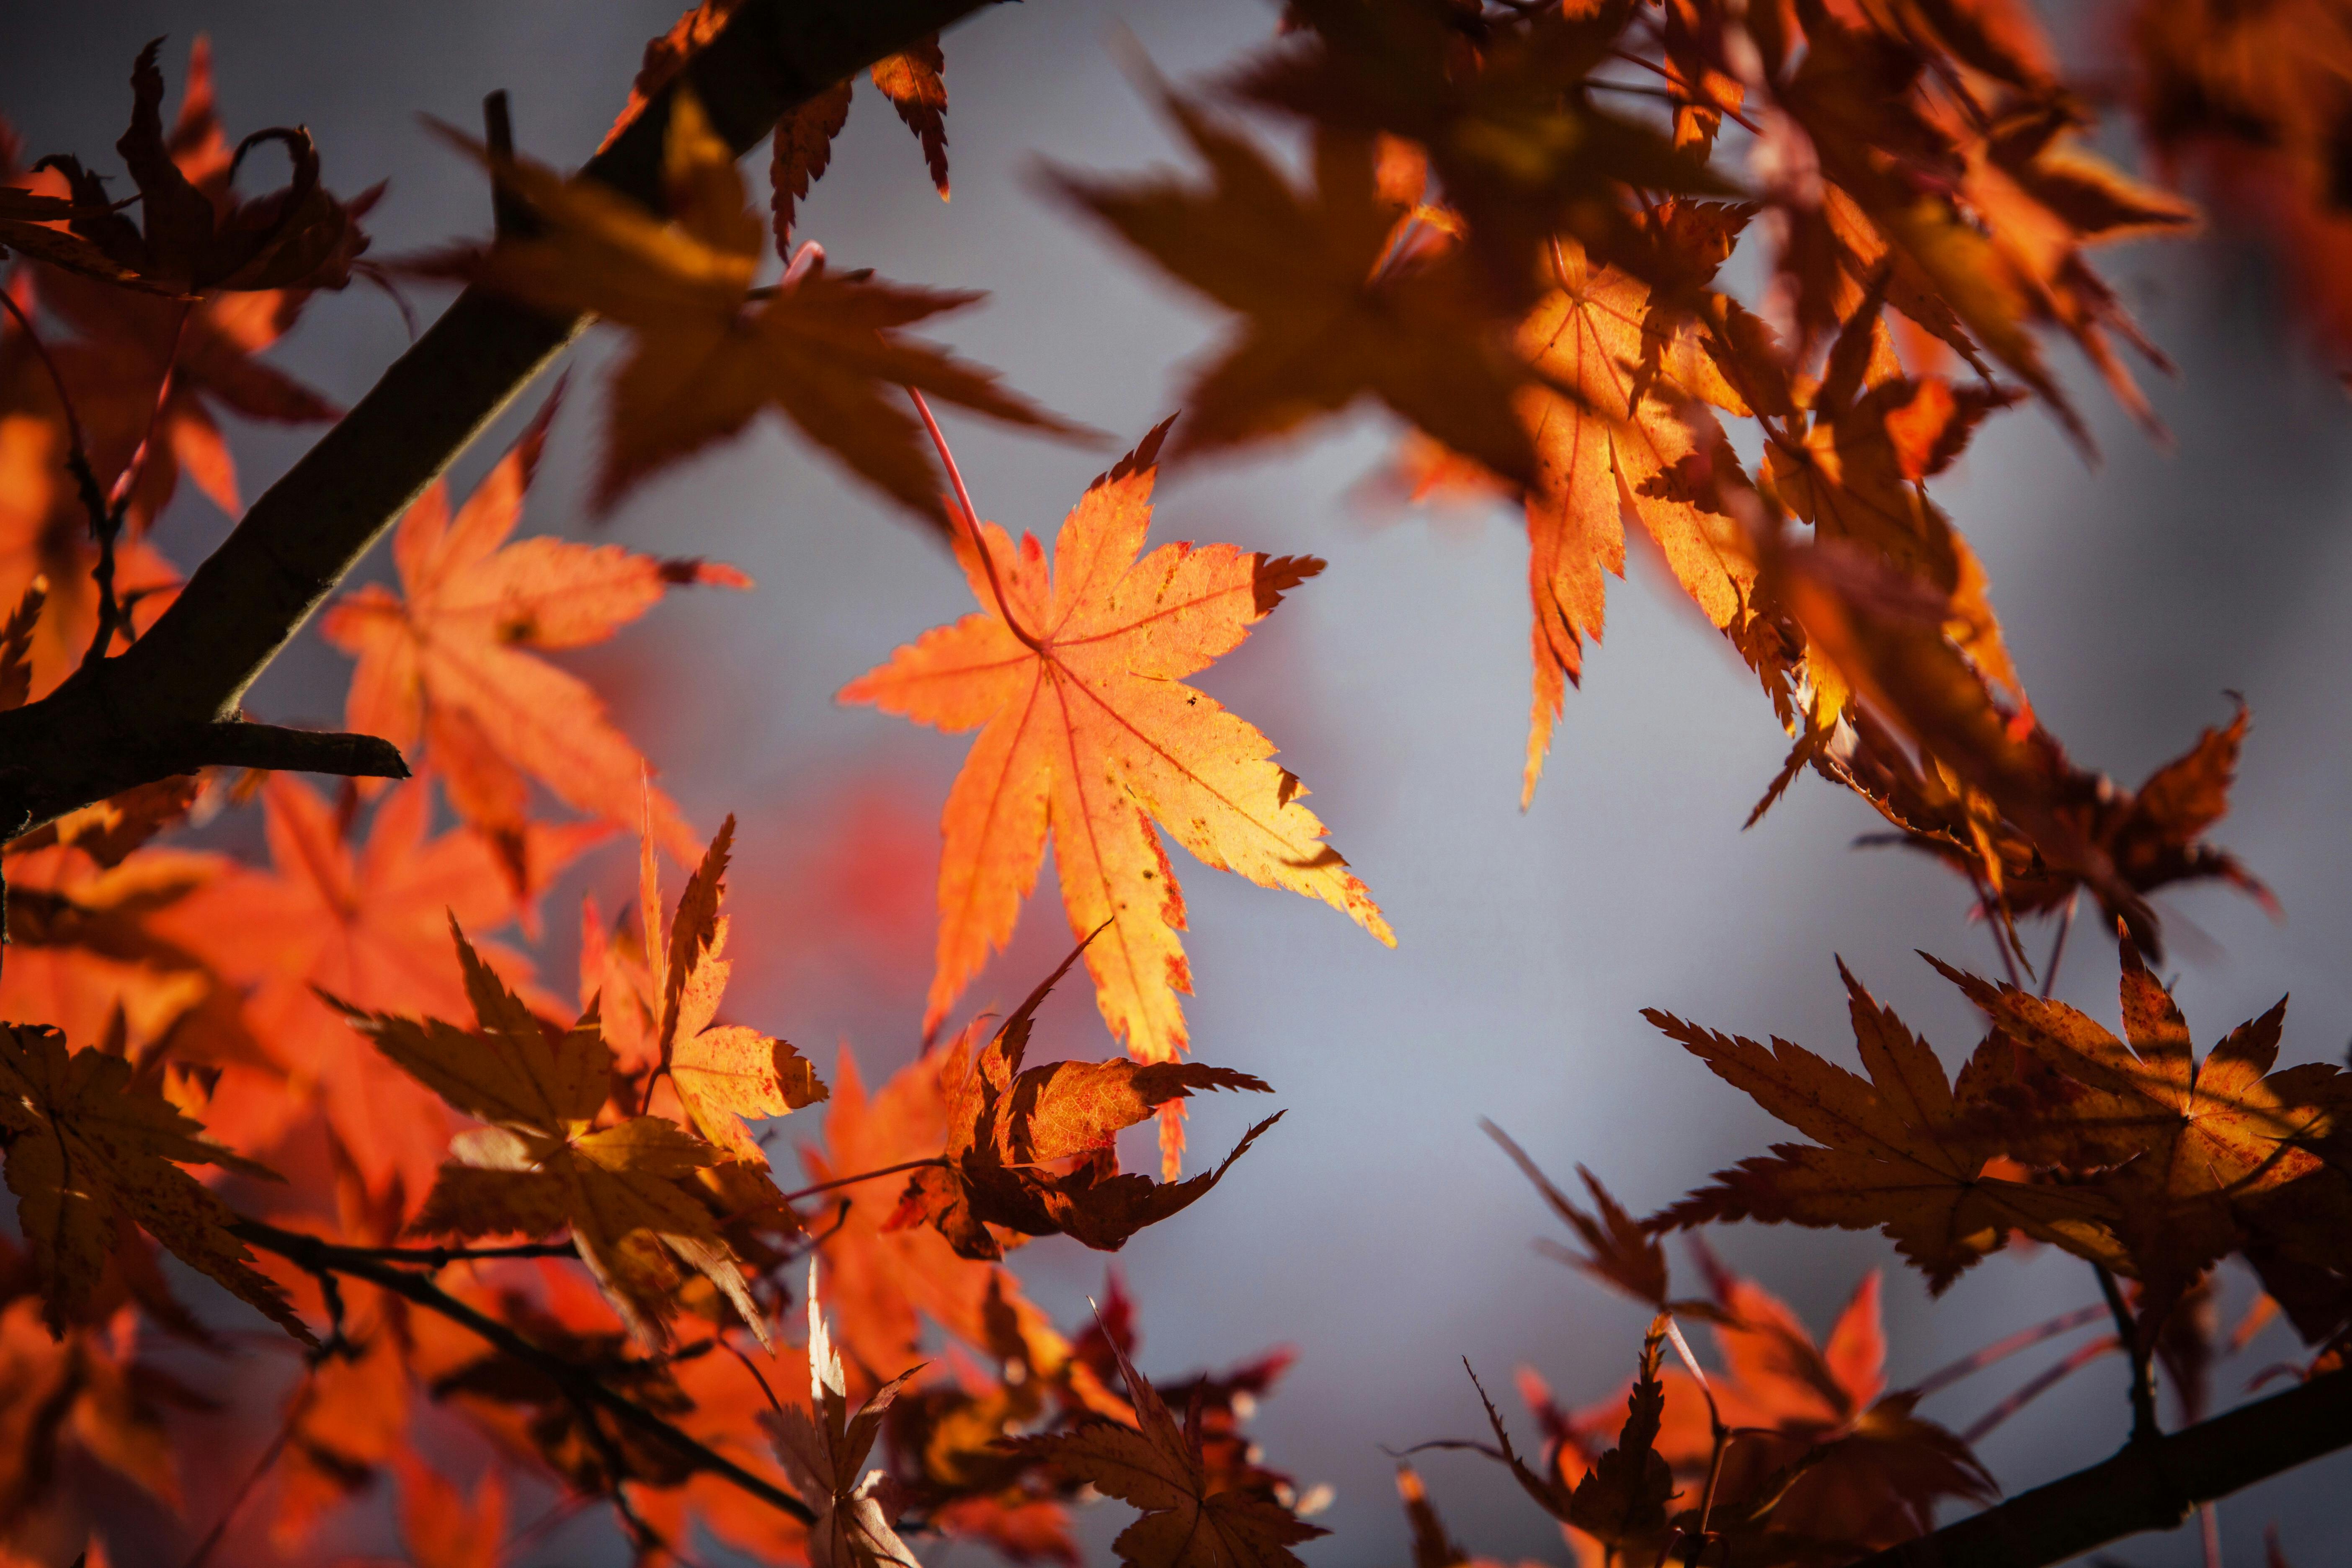 500 Maple Leaf Pictures HD  Download Free Images on Unsplash